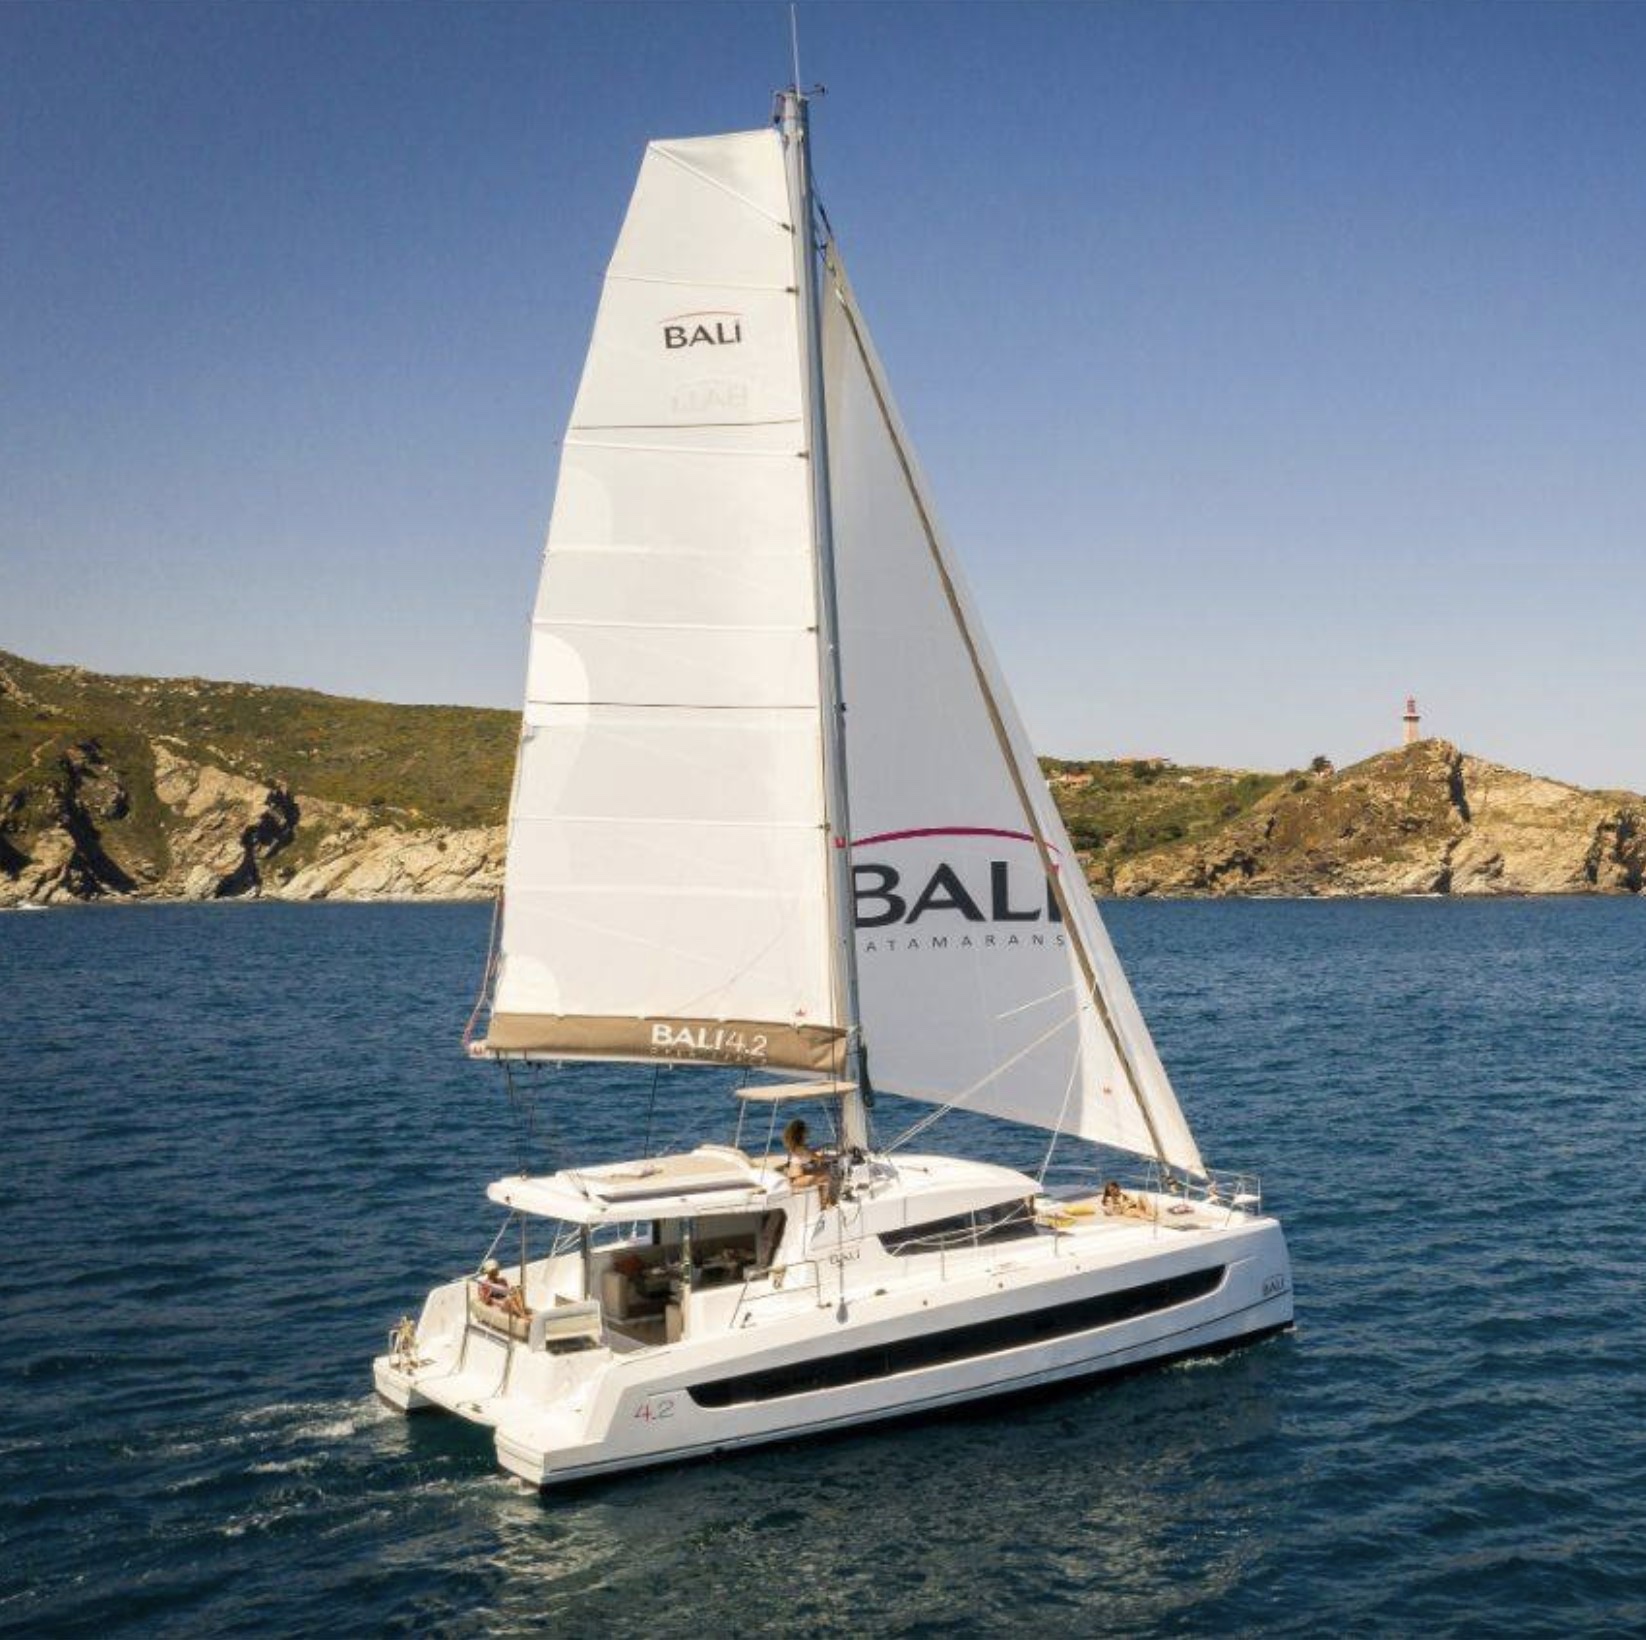 Used Sail Catamaran for Sale 2022 Bali 4.2 Additional Information